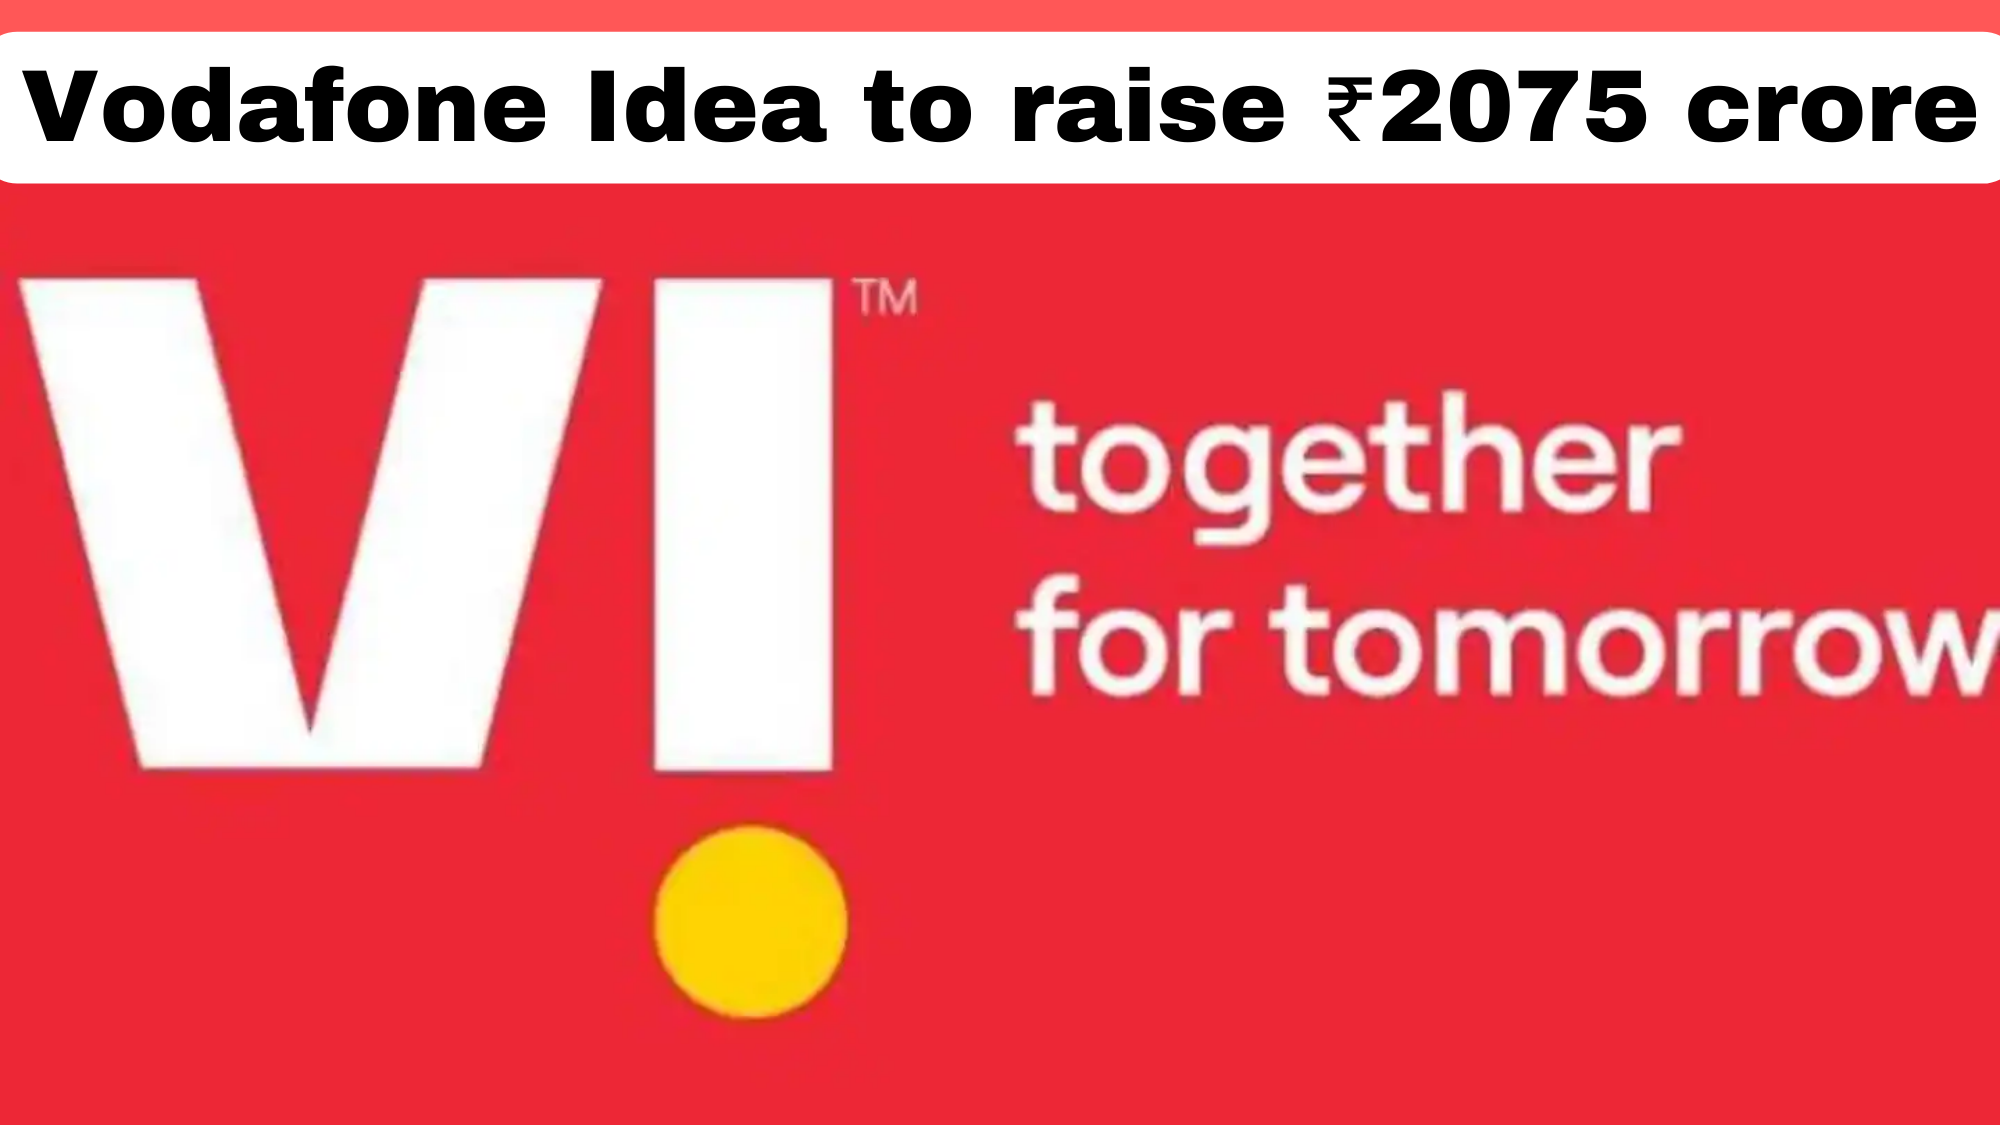 Vodafone Idea to raise Rs 2075 crore, Its Survival or Revival? Vodafone Idea, one of India's leading telecom operators